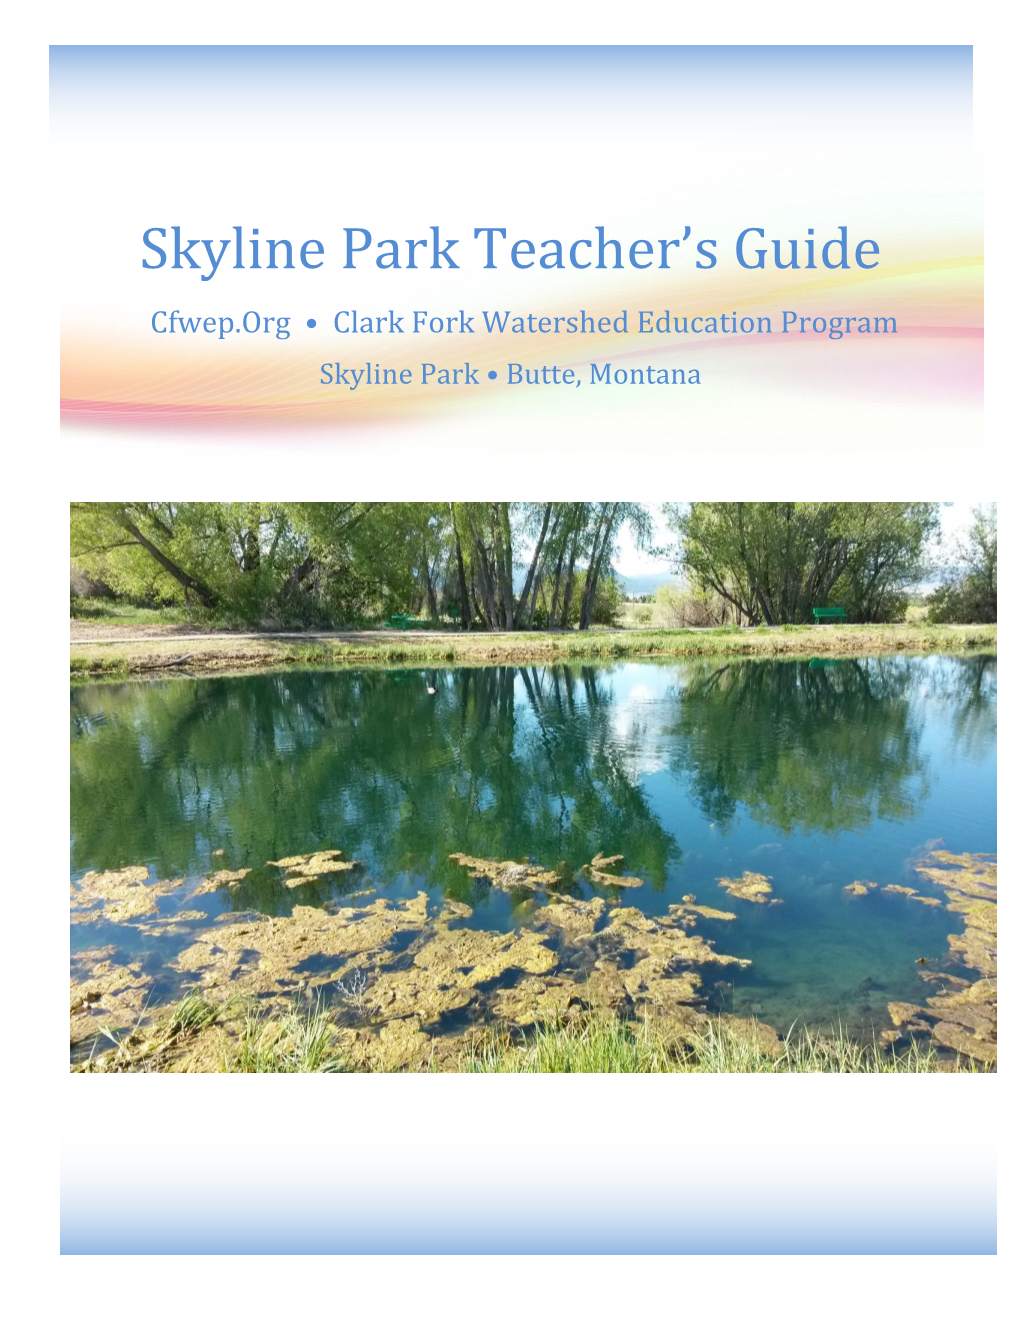 Skyline Park Teacher's Guide Glossary